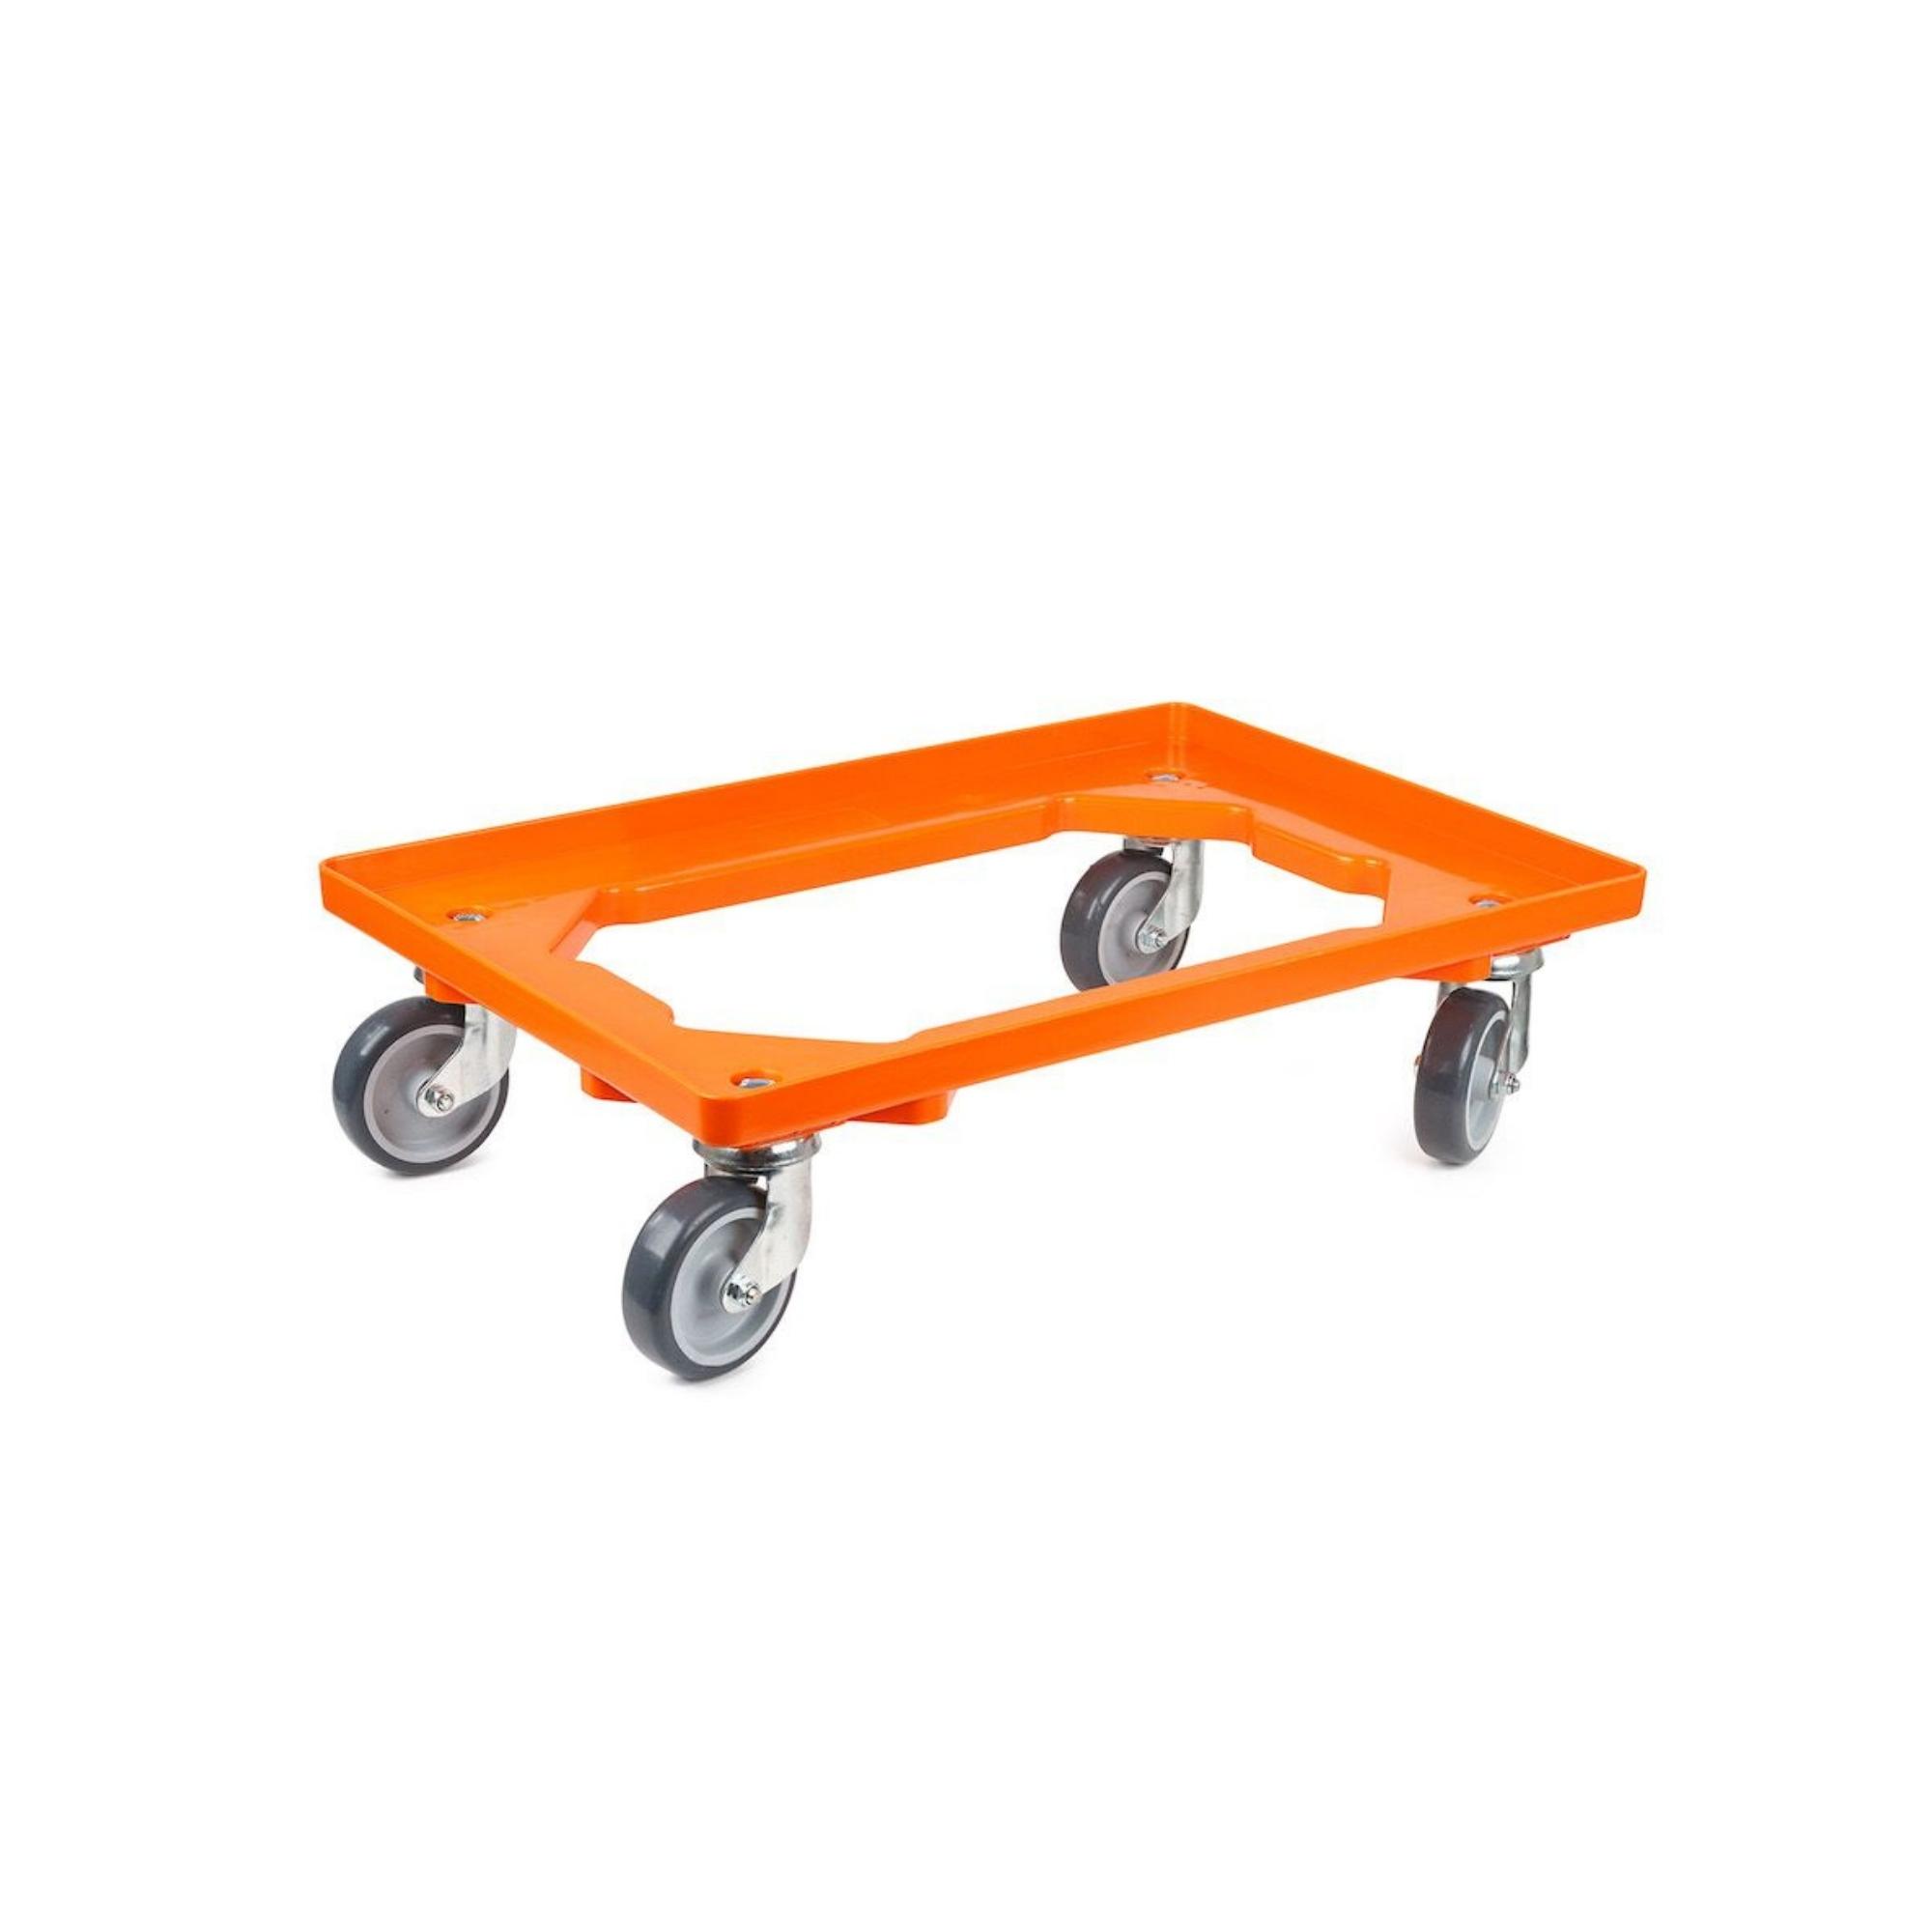 SparSet 10x Transportroller für Euroboxen 60x40cm mit Gummiräder orange | Offenes Deck | 2 Lenkrollen & 2 Bremsrollen | Traglast 300kg | Kistenroller Logistikroller Rollwagen Profi-Fahrgestell